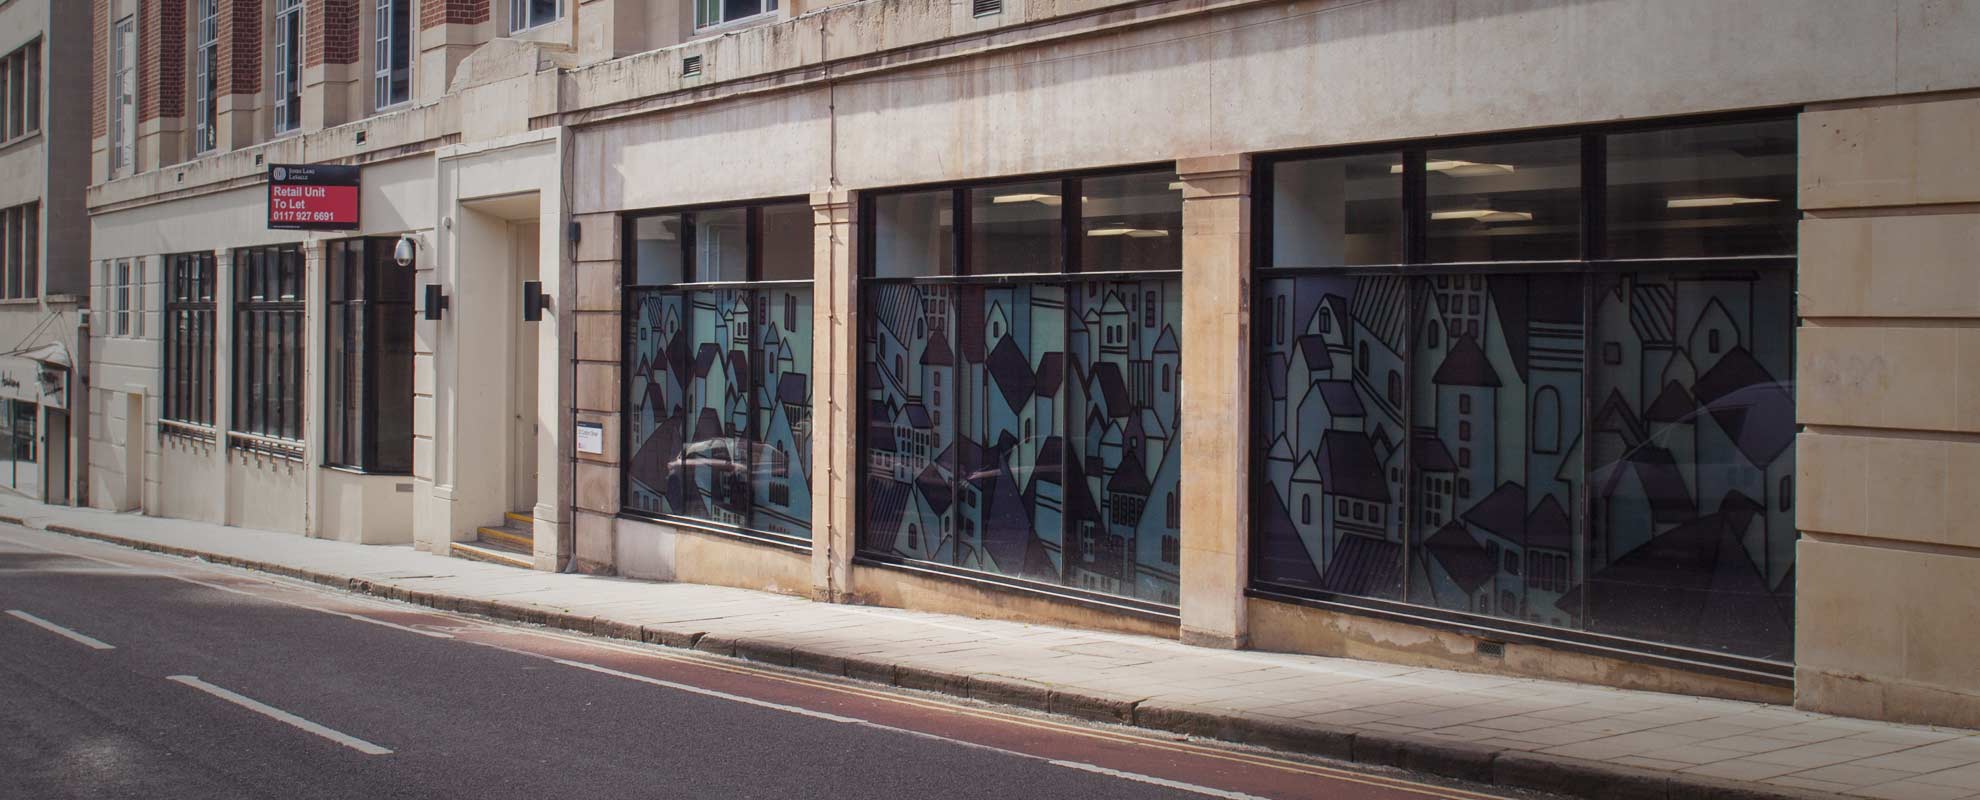 Black aluminium window wall for retail space in Colston Street, Bristol